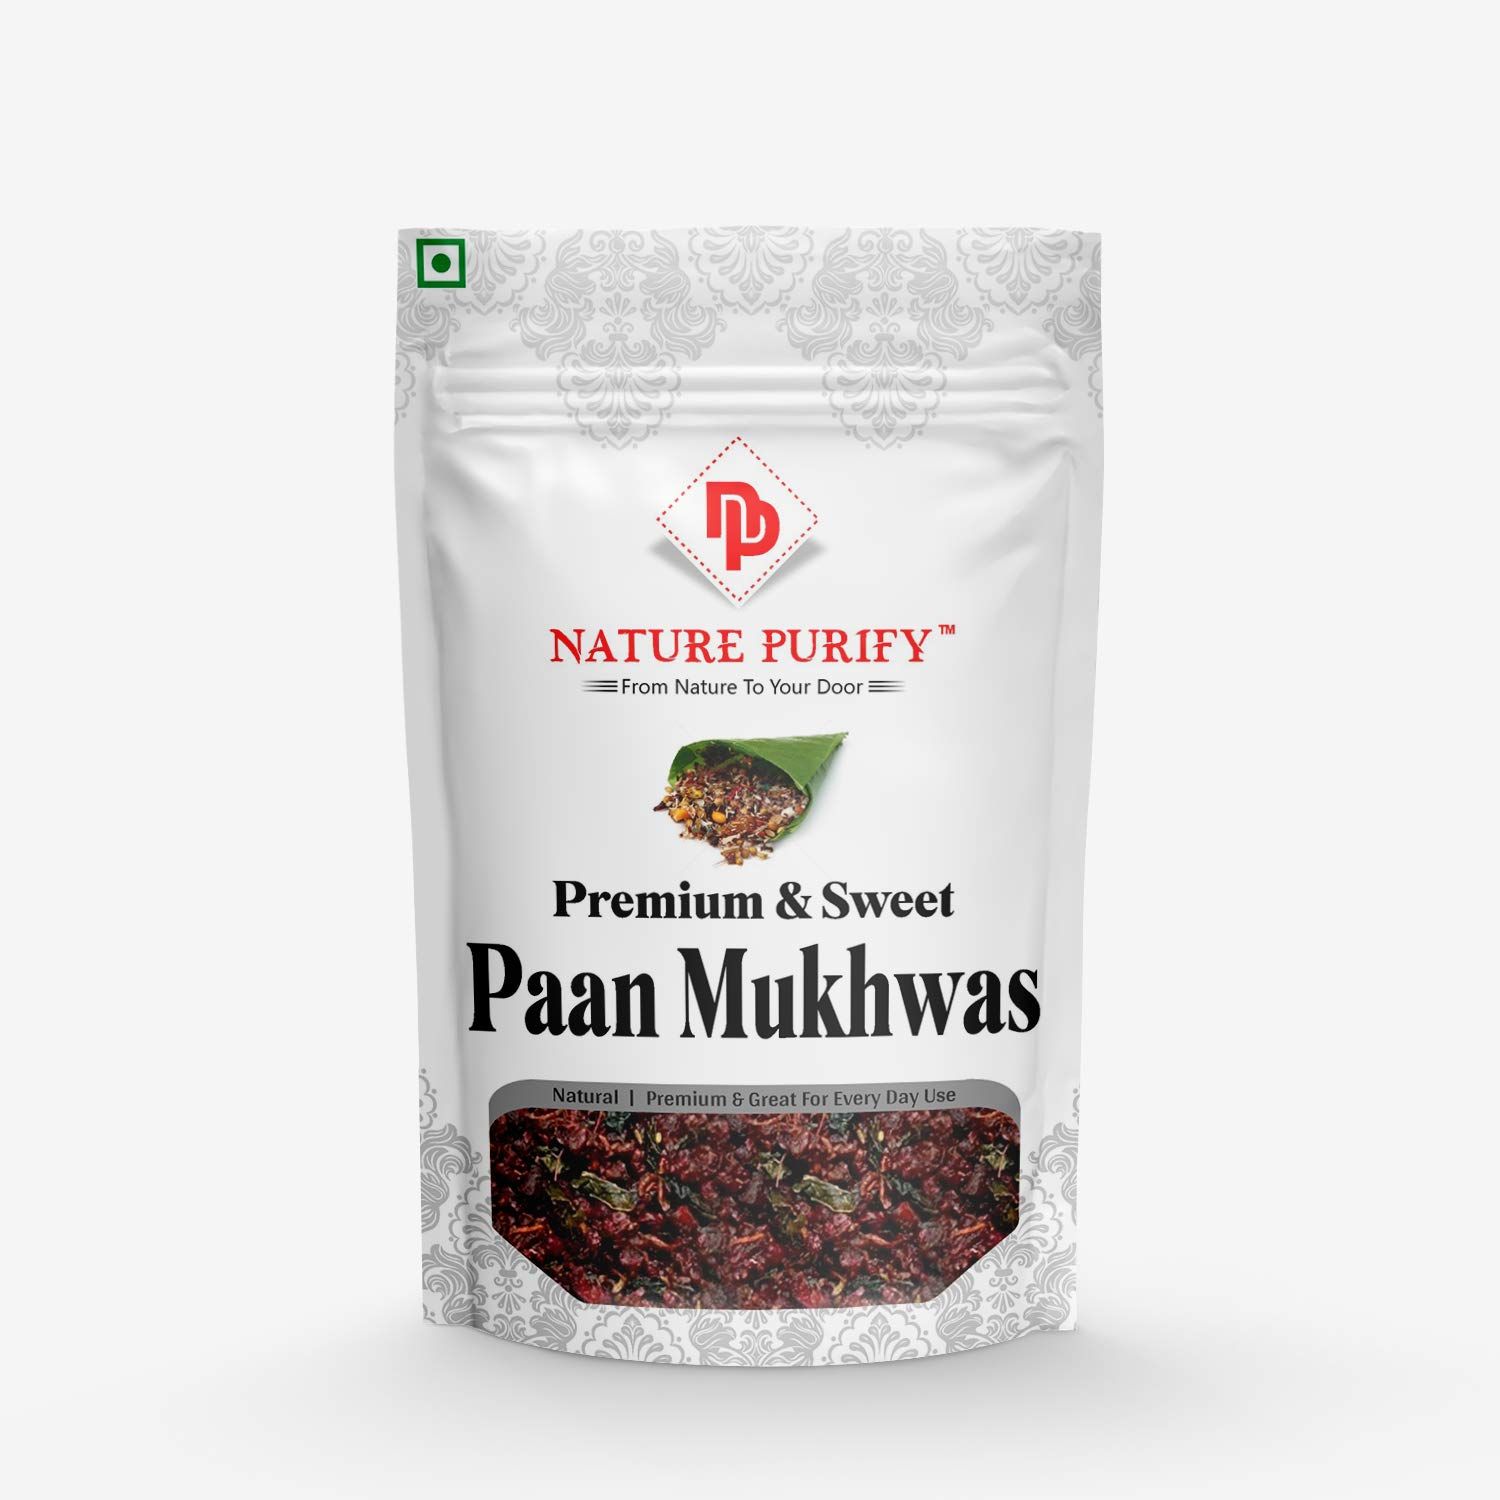 Nature Purify Sweet Pan Mukhwas Image